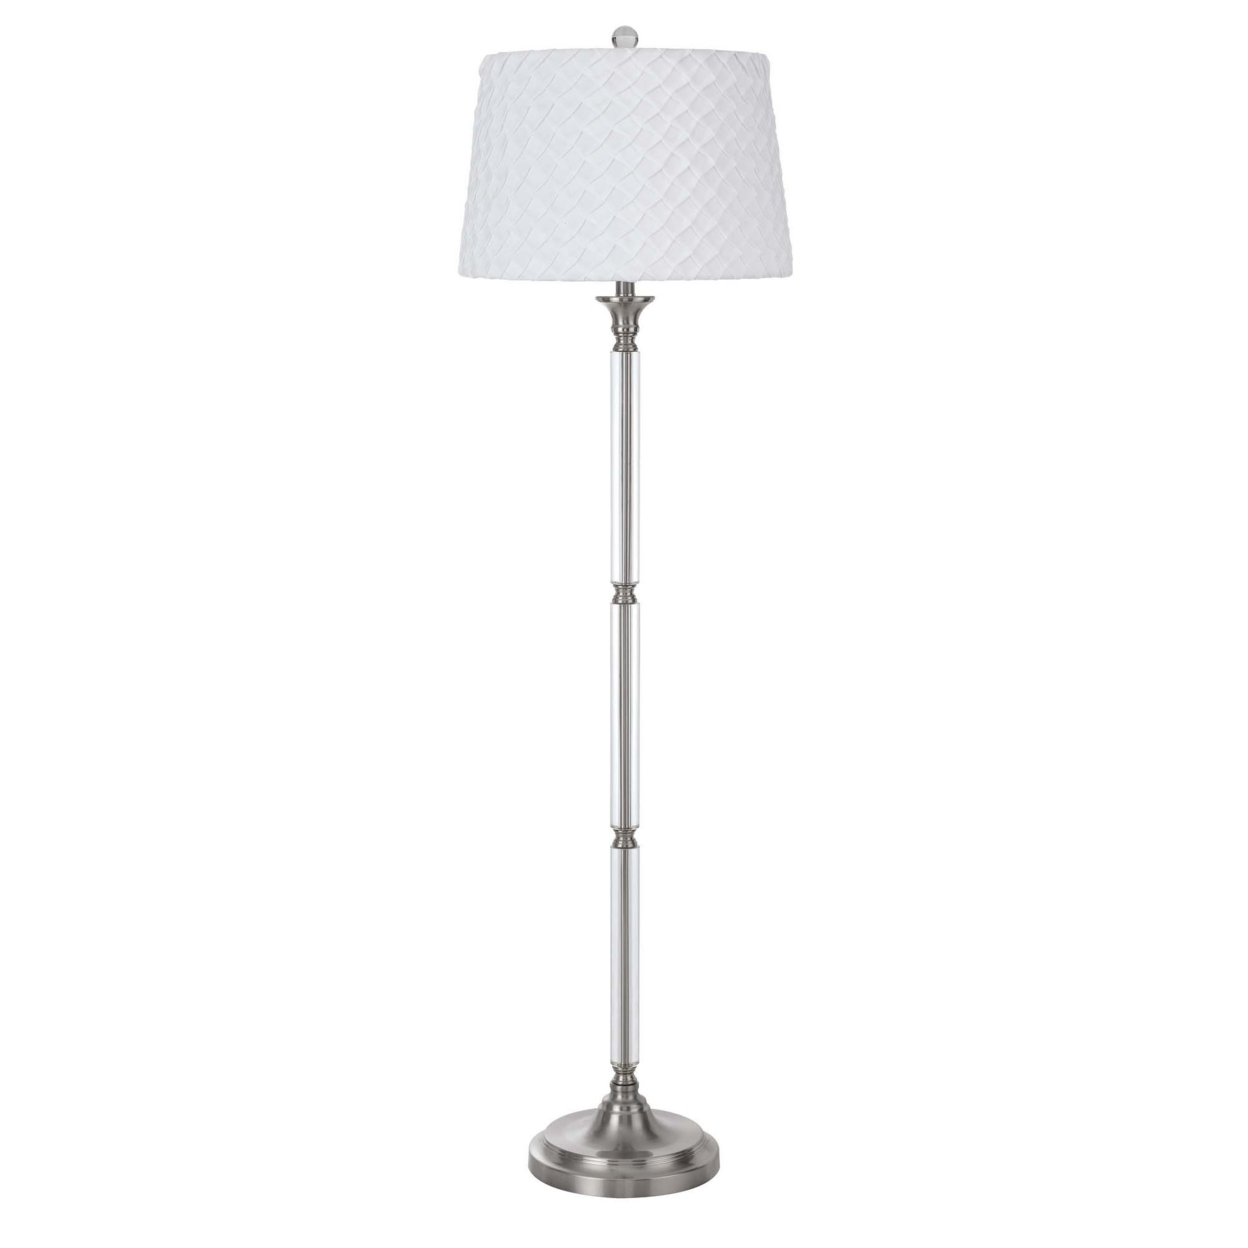 Floor Lamp With Tubular Metal And Crystal Base, White And Silver- Saltoro Sherpi